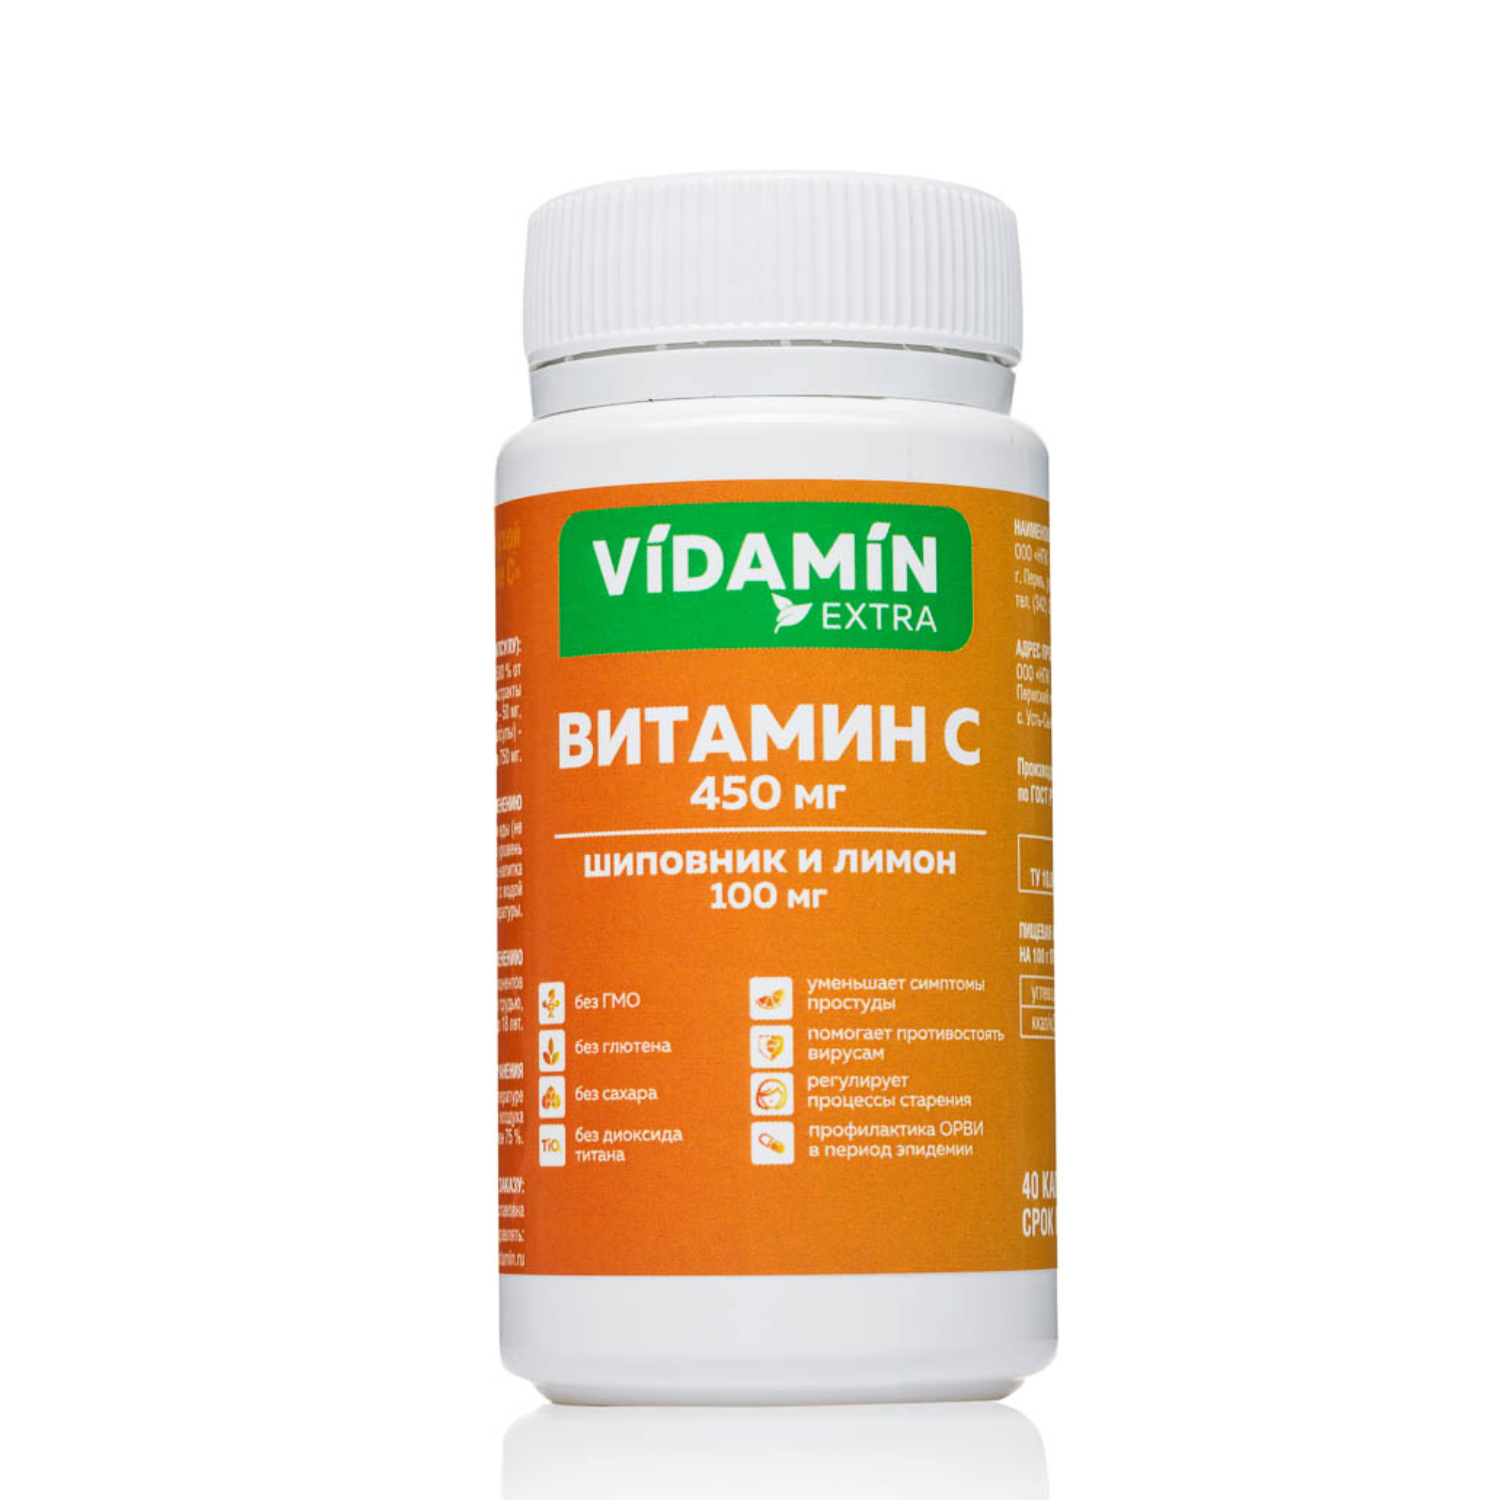 Vitamin extra. Витамин с с биофлавоноидами. Рутин 100мг. Витамин с с биофлавоноидами купить. Шиповник витамины.